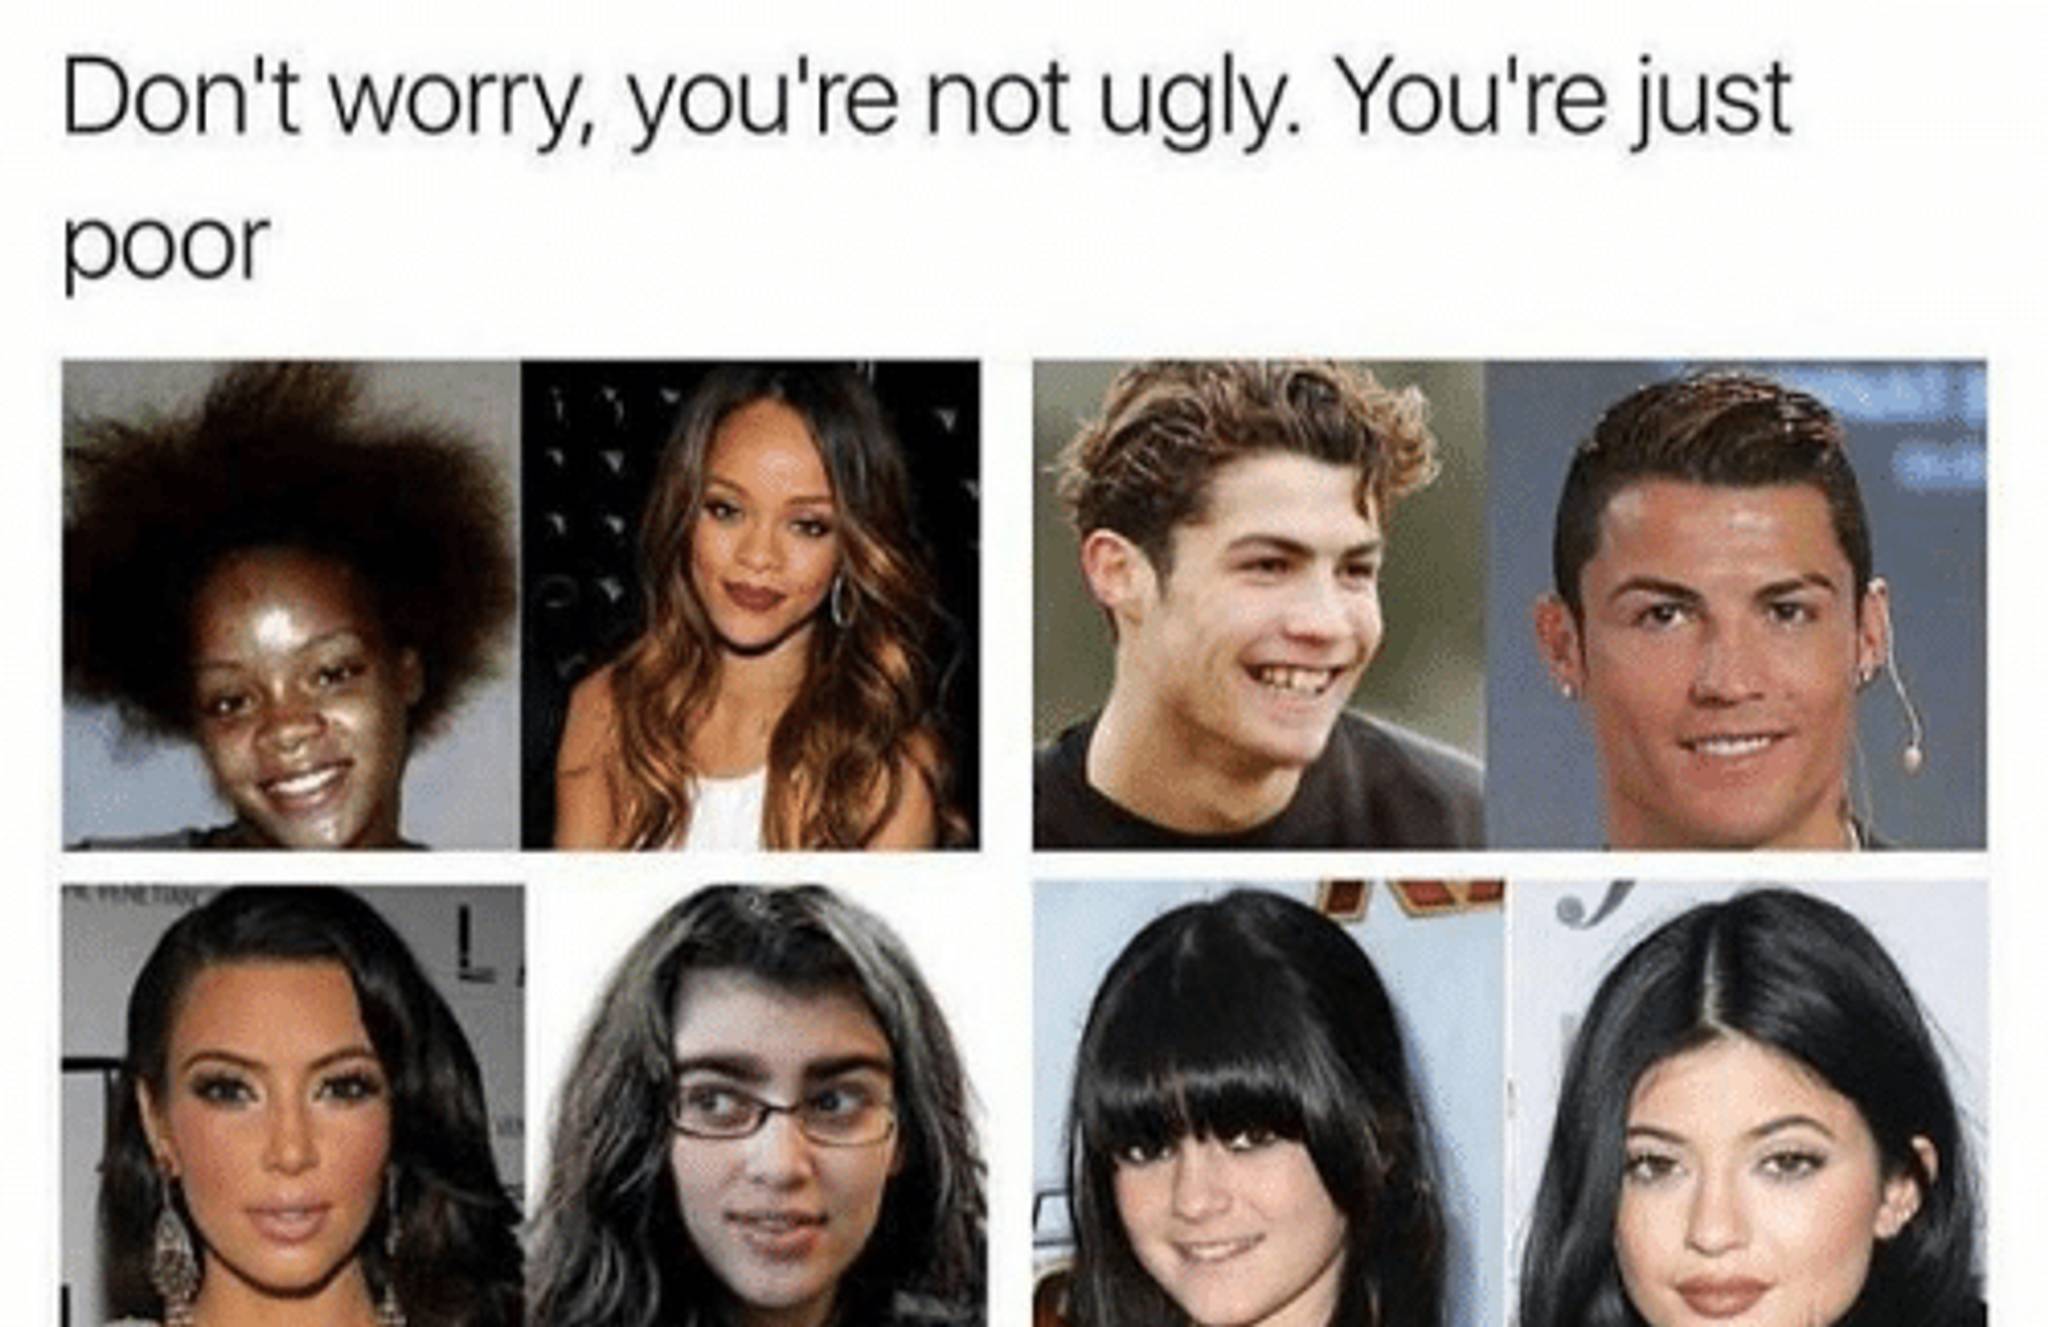 ‘I’m not ugly, I’m poor’ meme lets people embrace flaws 